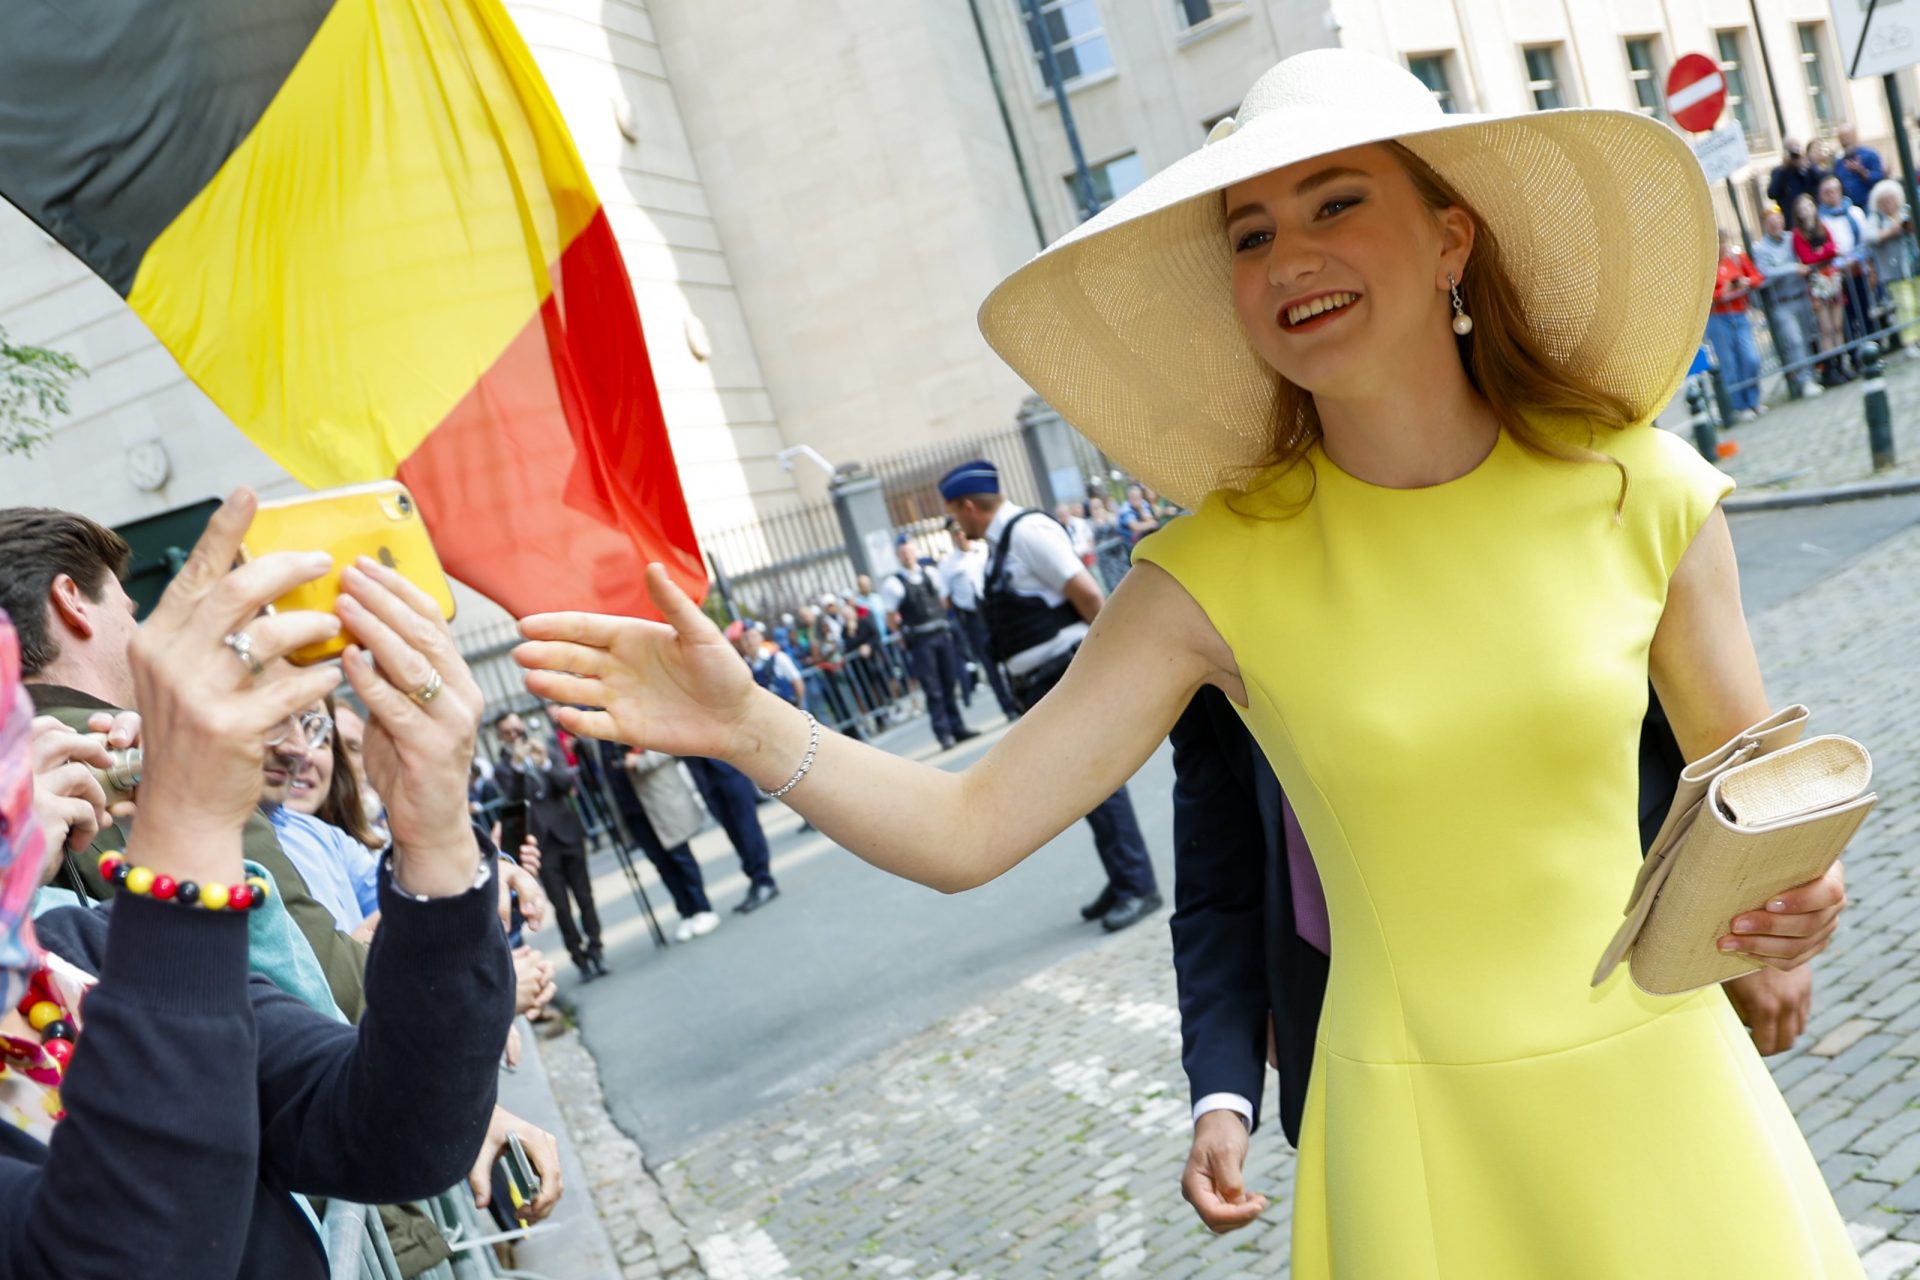 Princess Elisabeth, a bright star among European royalty